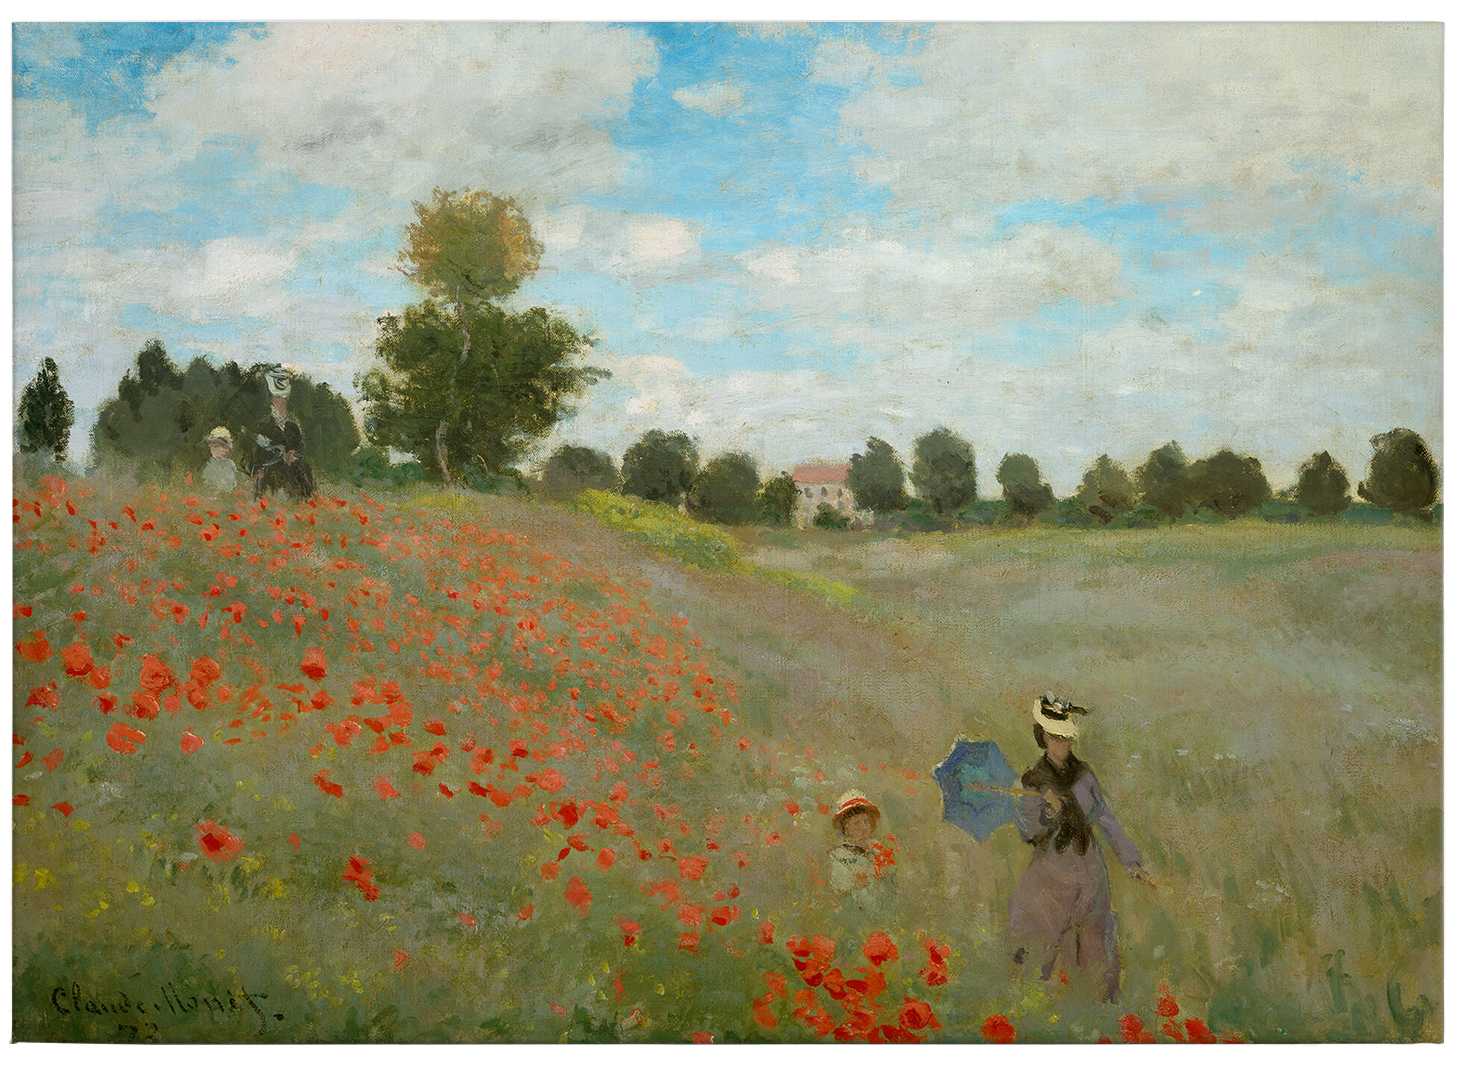             Monet canvas print "Poppy field near argenteuil"
        